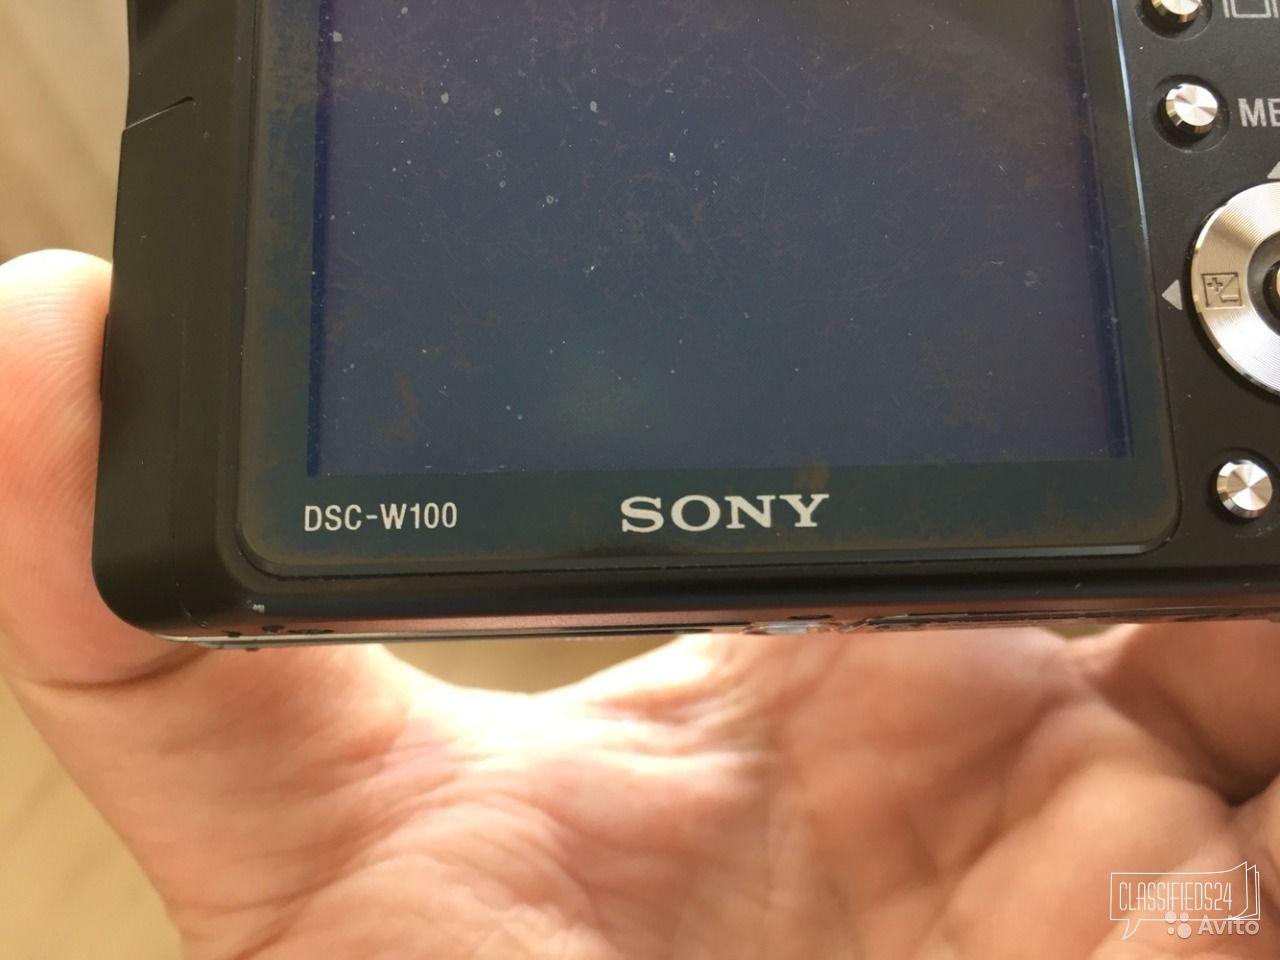 Sony Cyber-Shot DSC-W100, 8.1 mp в городе Севастополь, фото 3, телефон продавца: +7 (978) 060-24-17